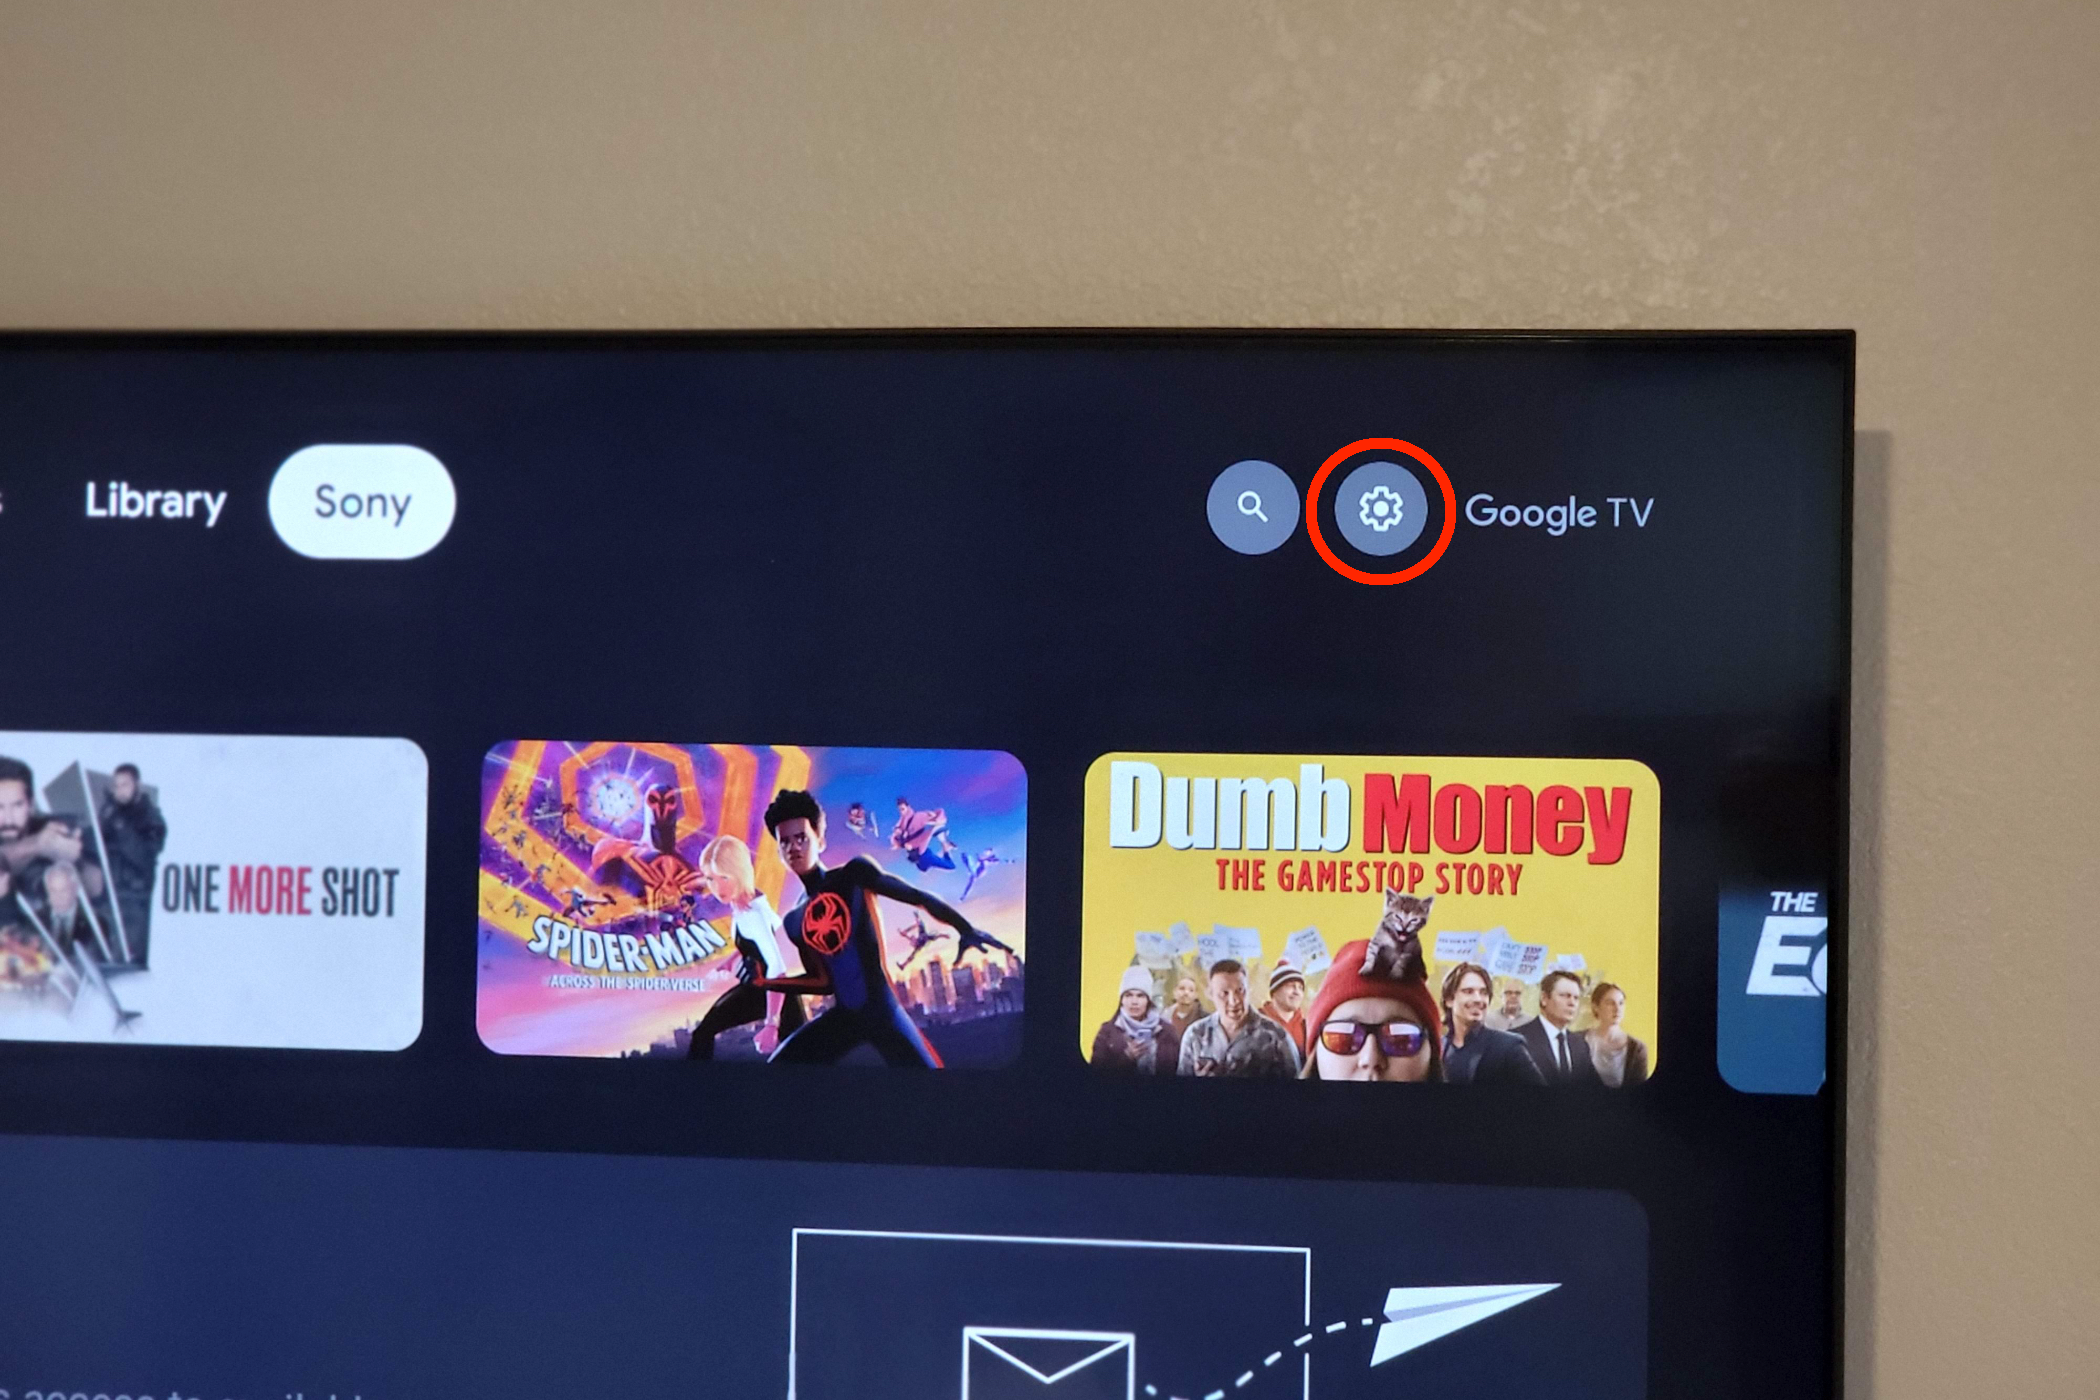 Google TV settings icon on Sony TV. 